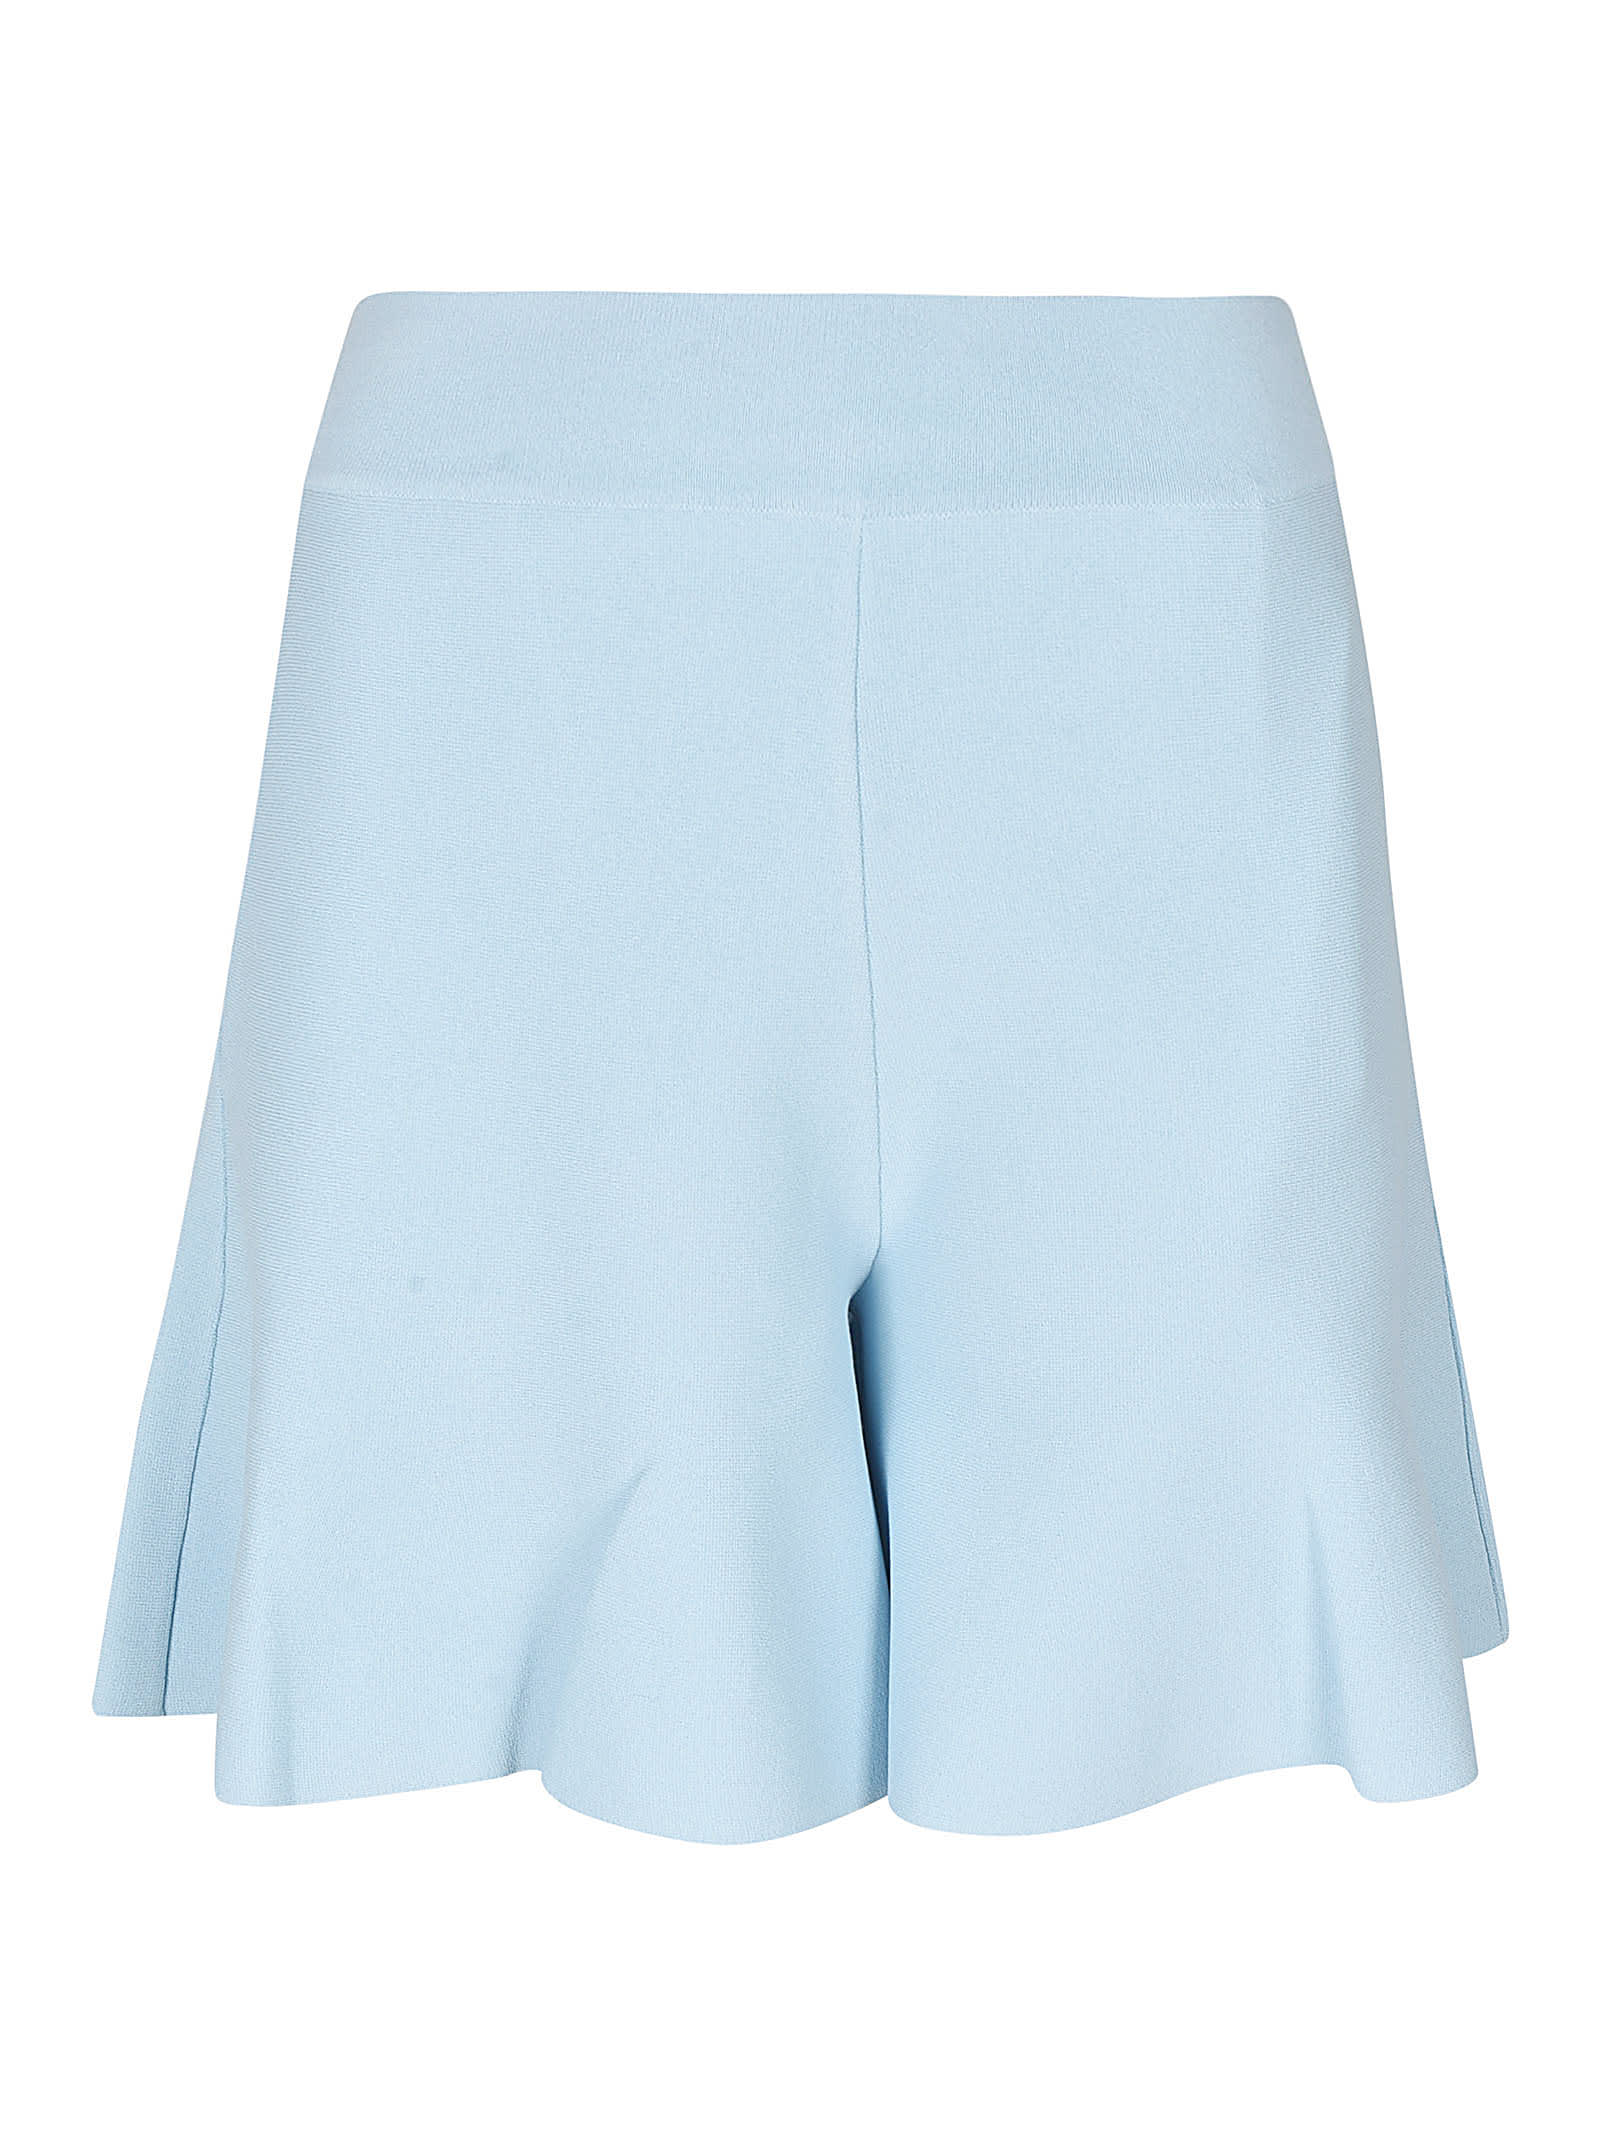 Stella McCartney Shilouette Shorts